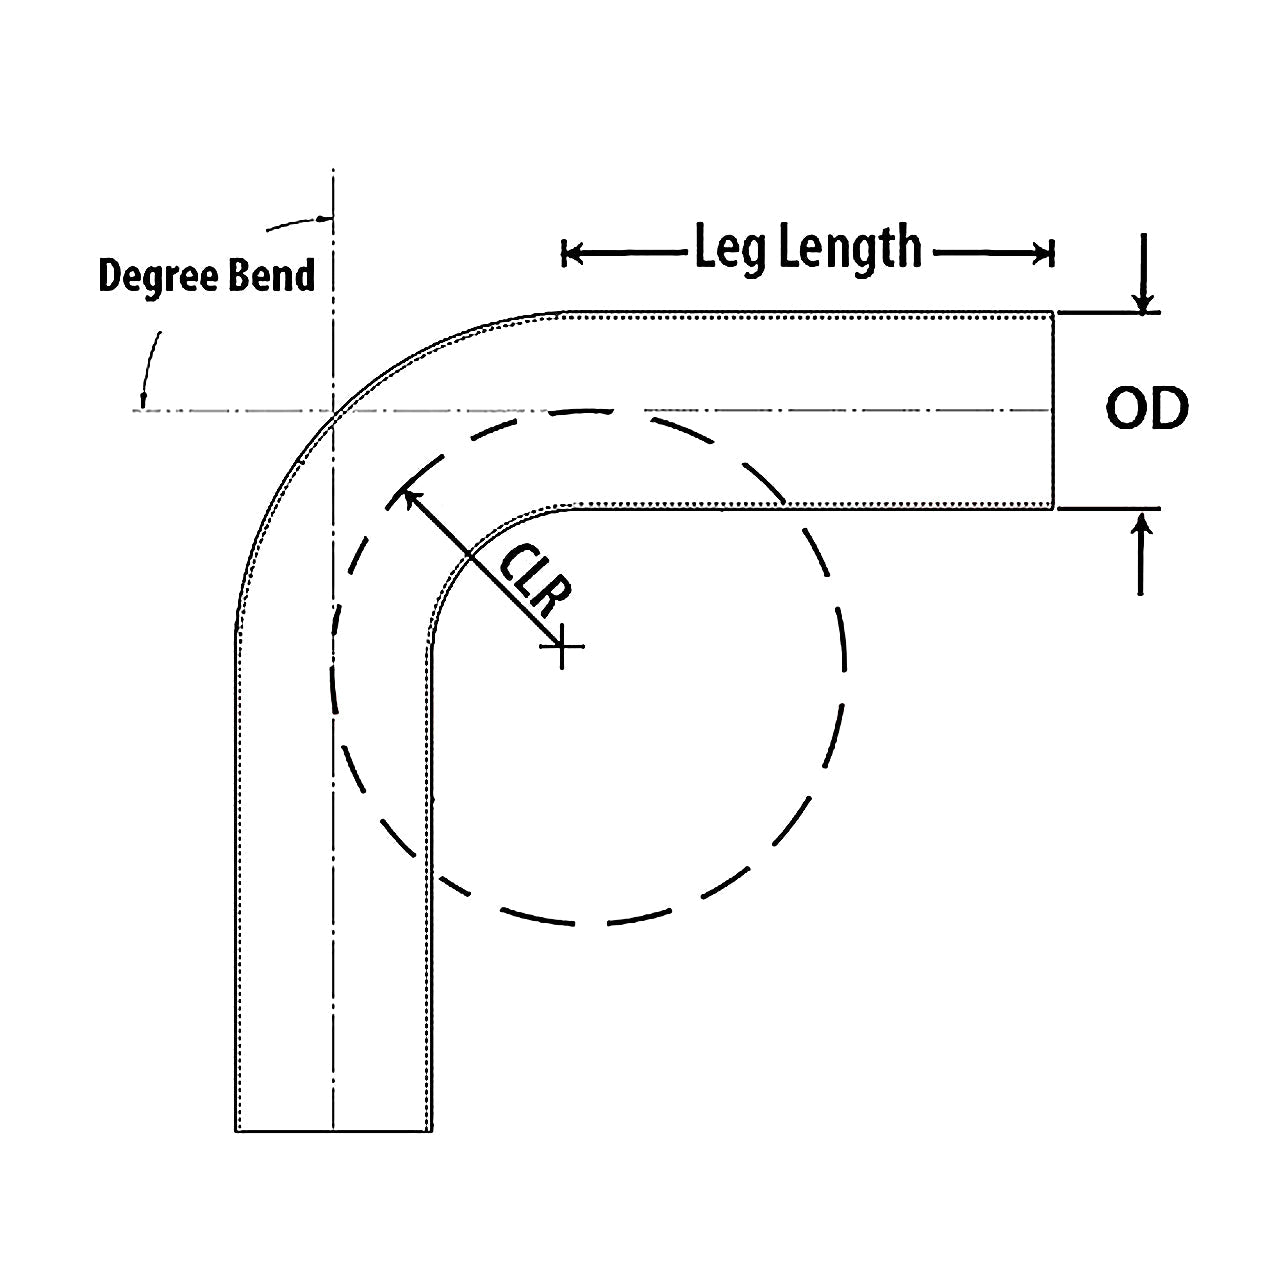 HPS 1-5/8" 45 Degree Bend 6061 Aluminum Elbow Pipe Tubing with 2" Center Line Radius